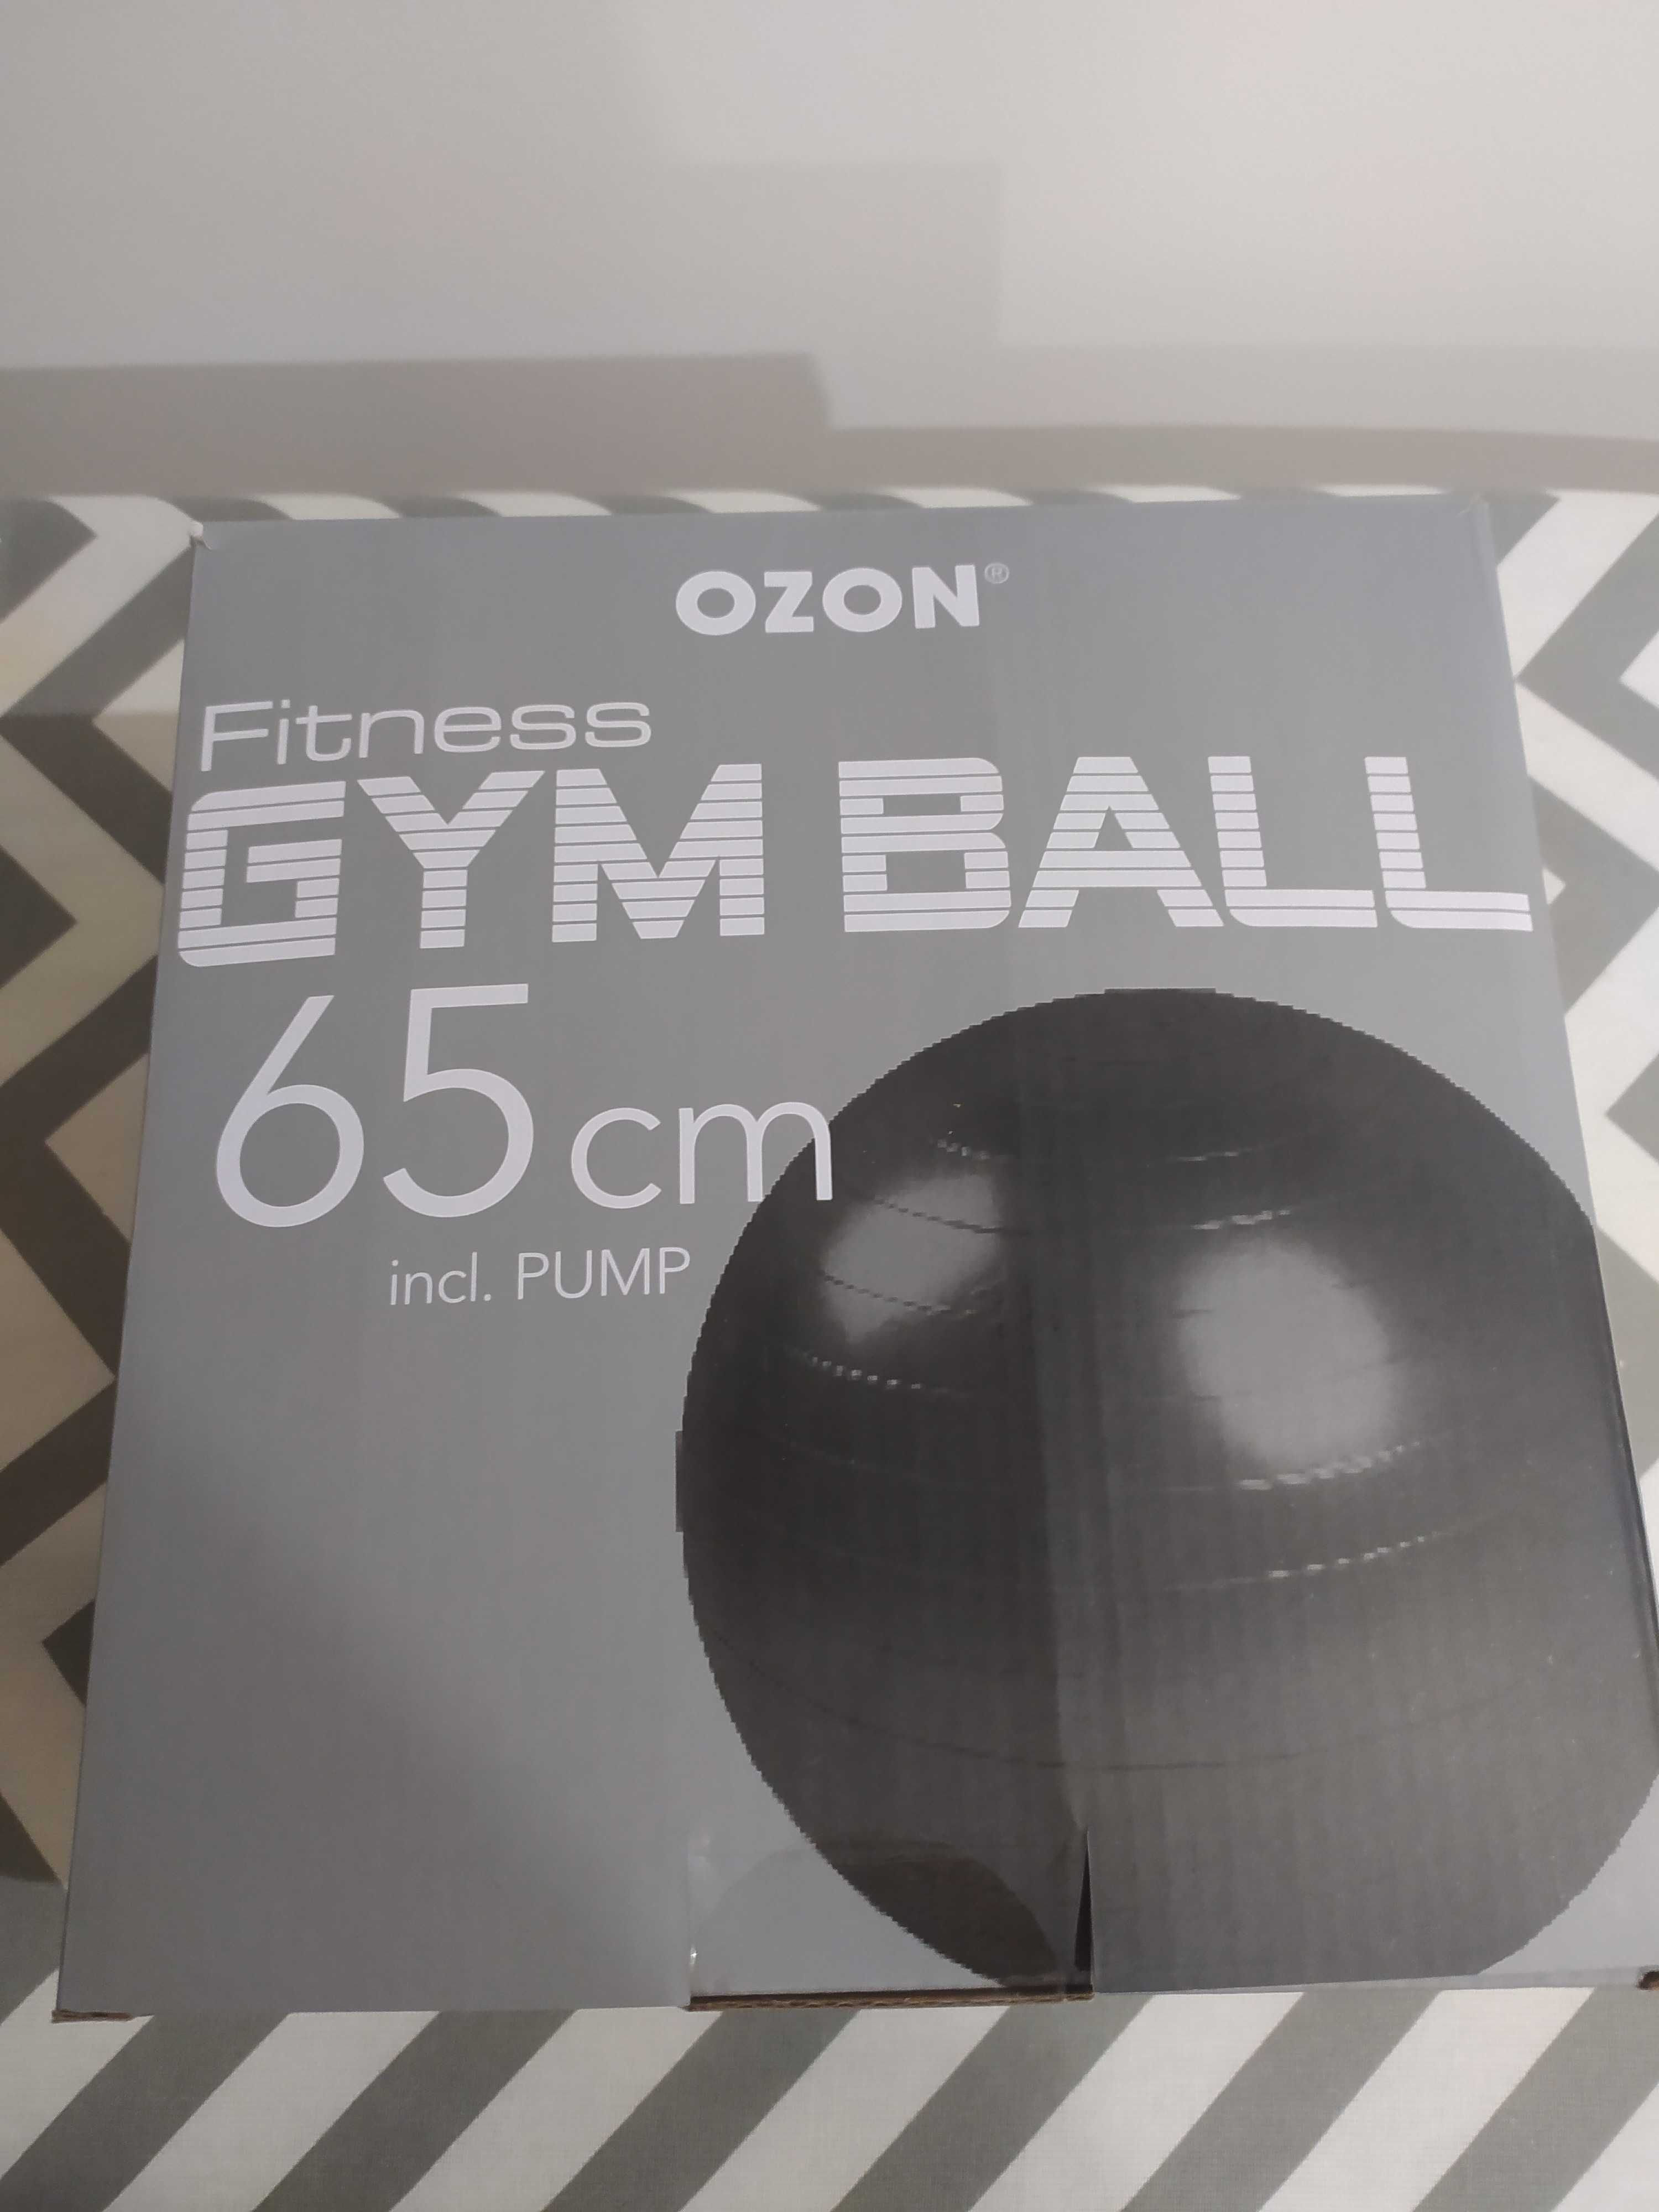 GYM BALL - 65 cm